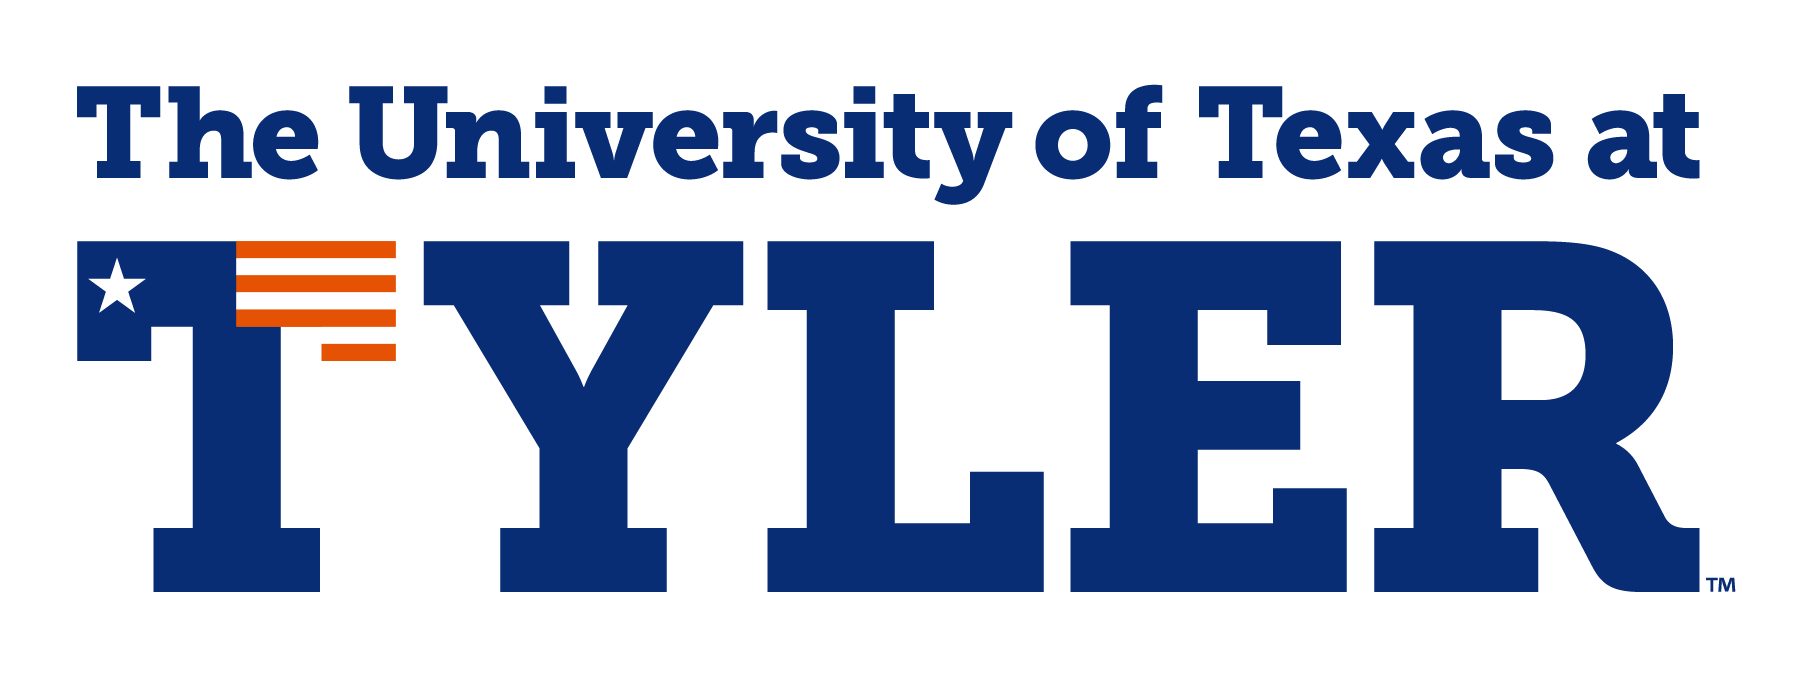 University of Texas - Tyler logo